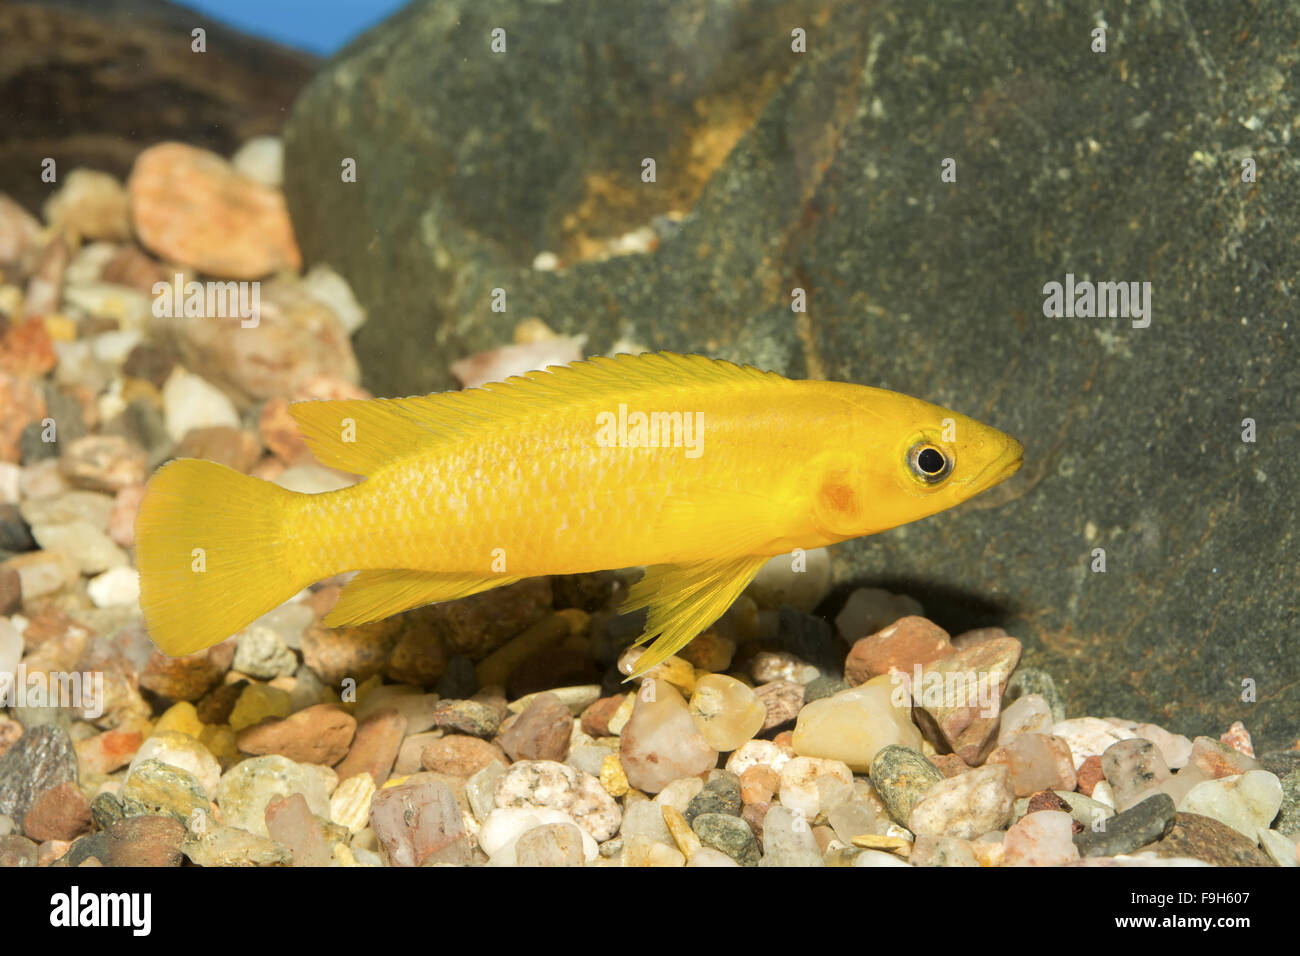 Cichlid fish from genus Neolamprologus in the aquarium Stock Photo